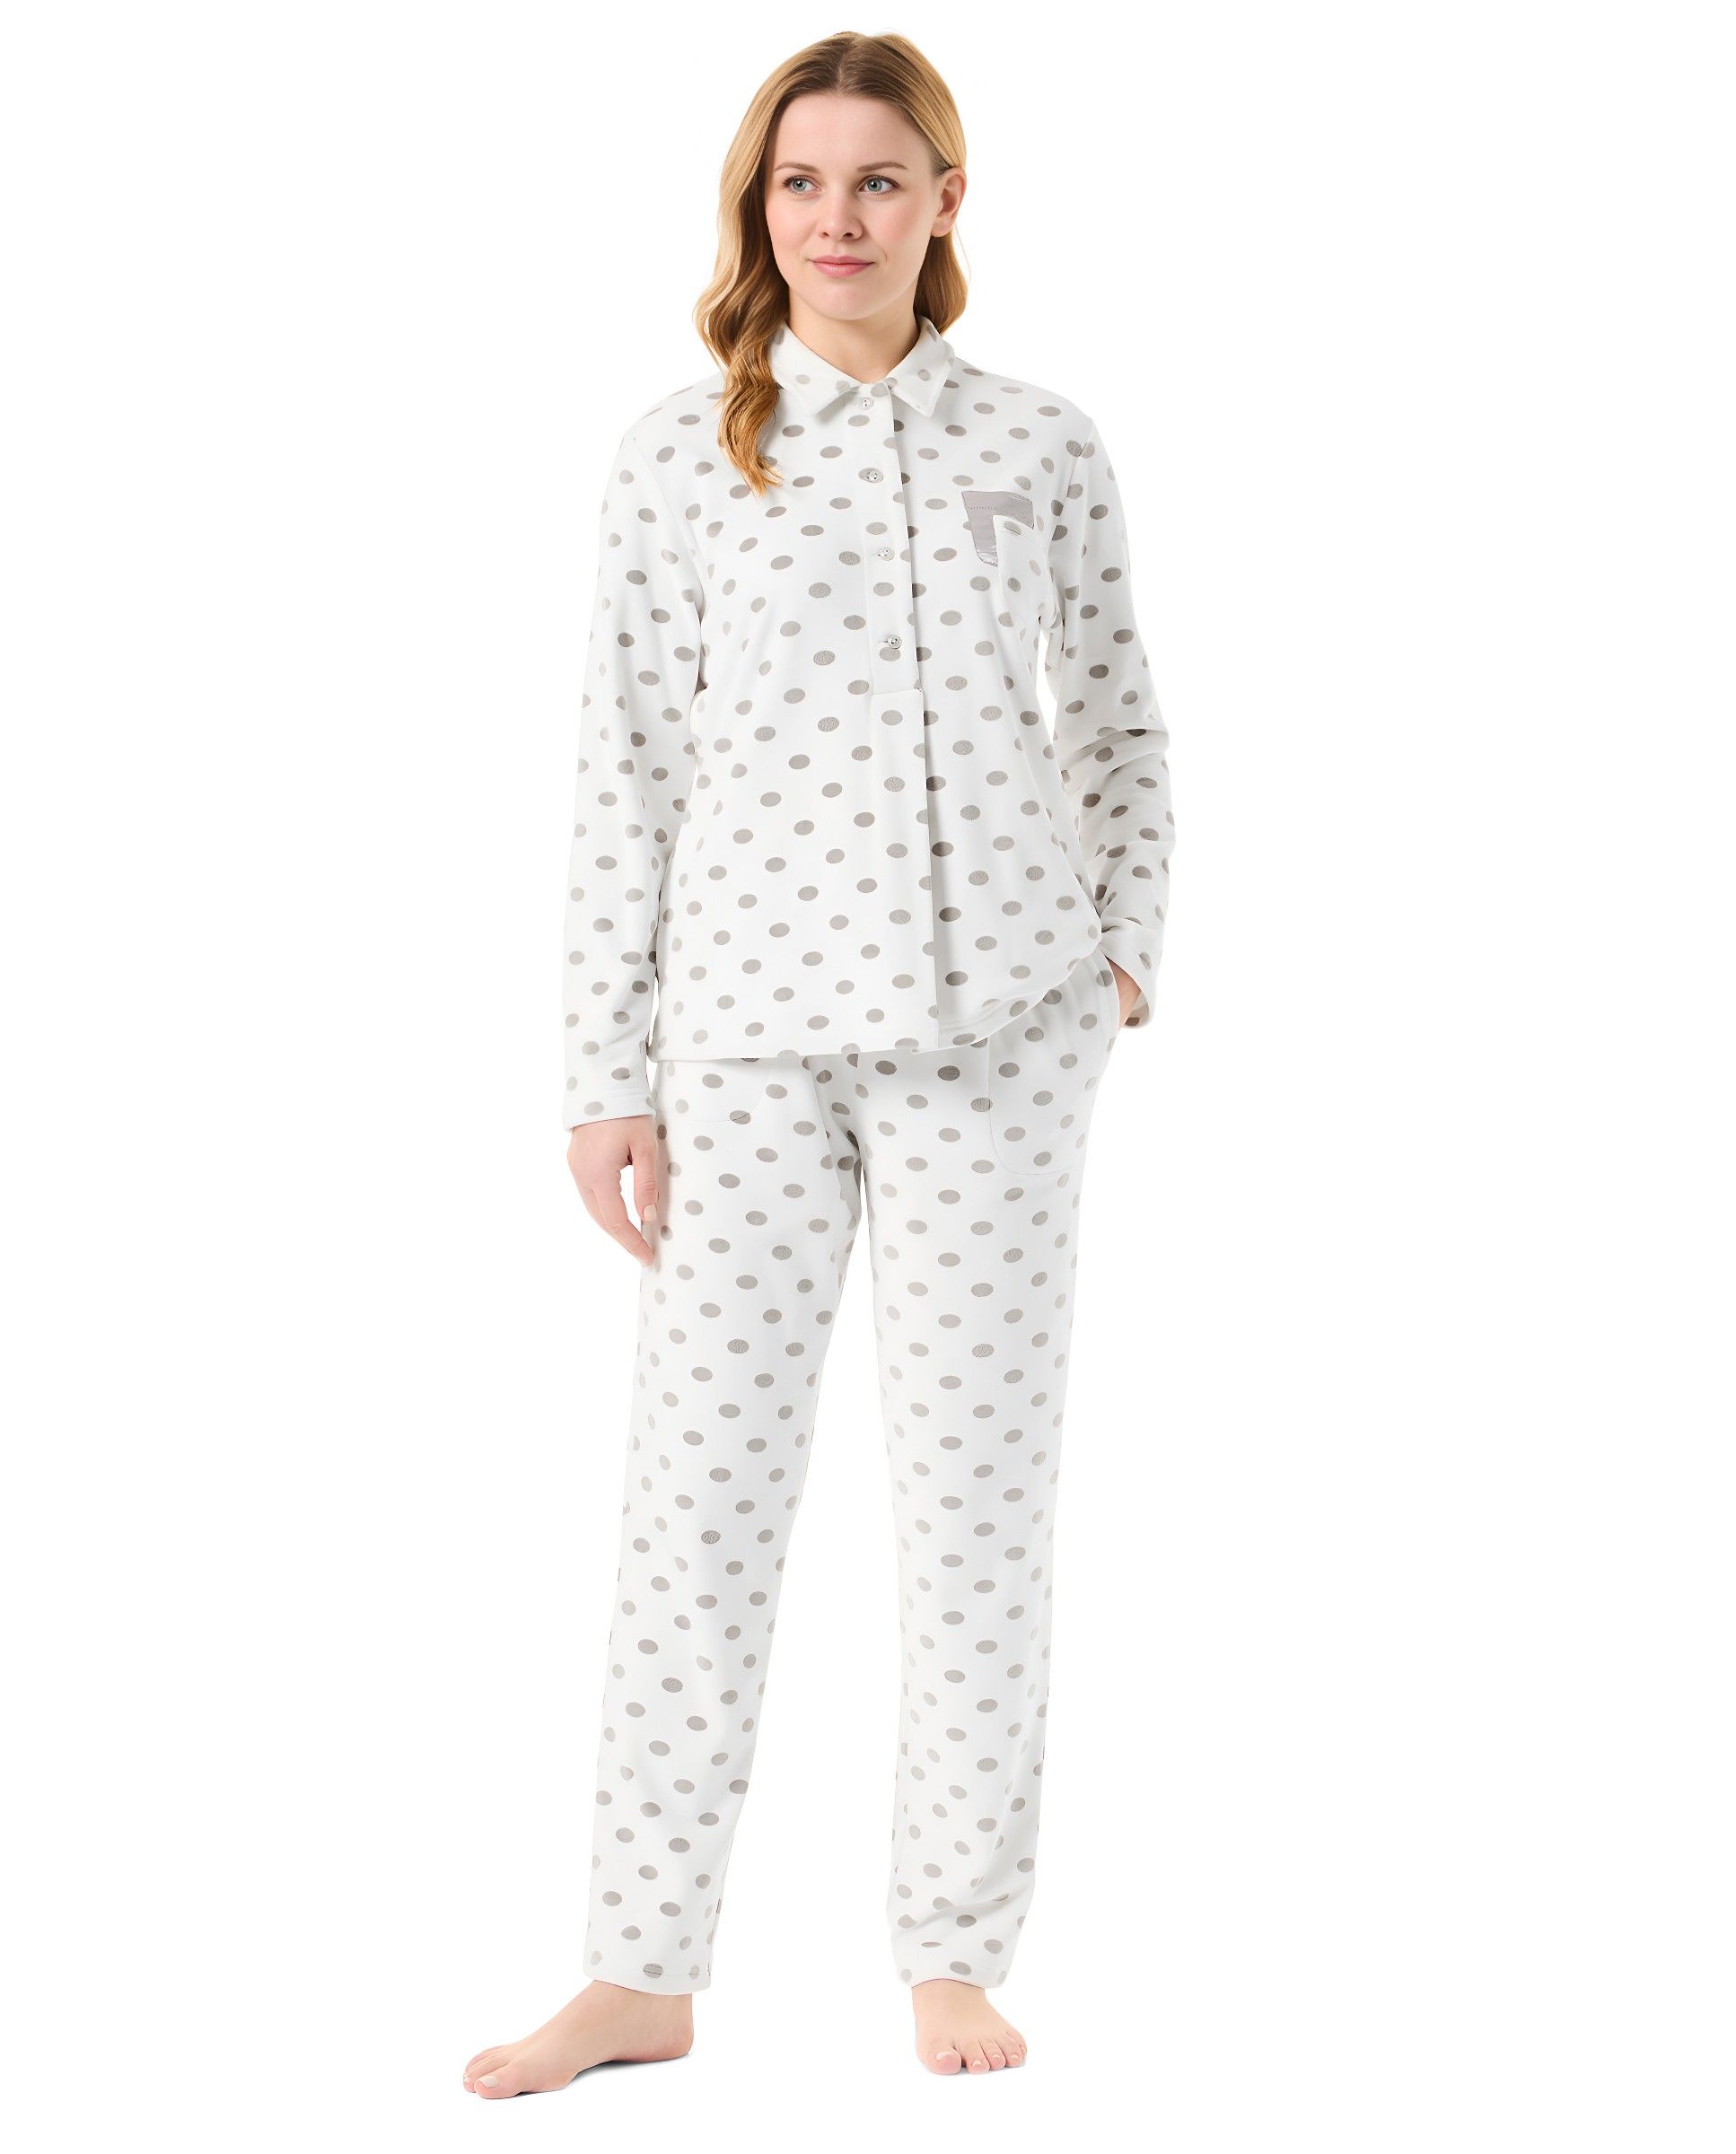 Women's long velvet pyjamas open jacket with polka dot pattern